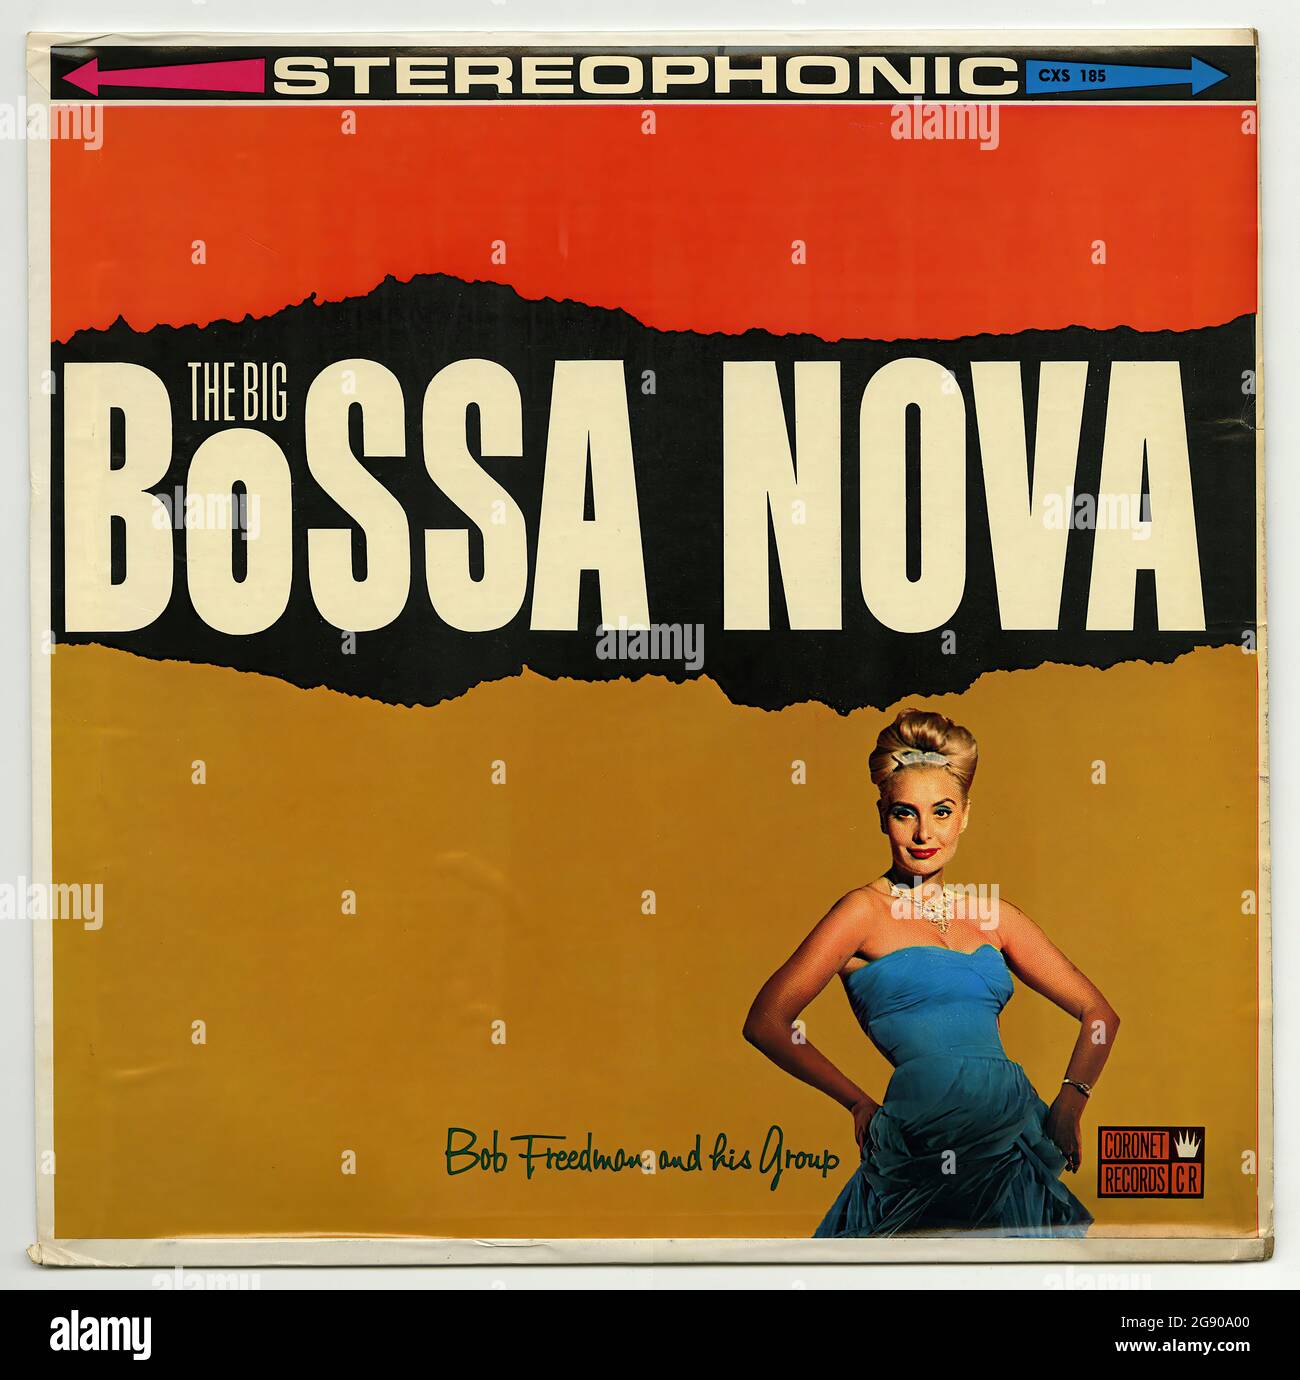 The Big Bossa Nova - Vintage Vinyl Record Stock Photo - Alamy